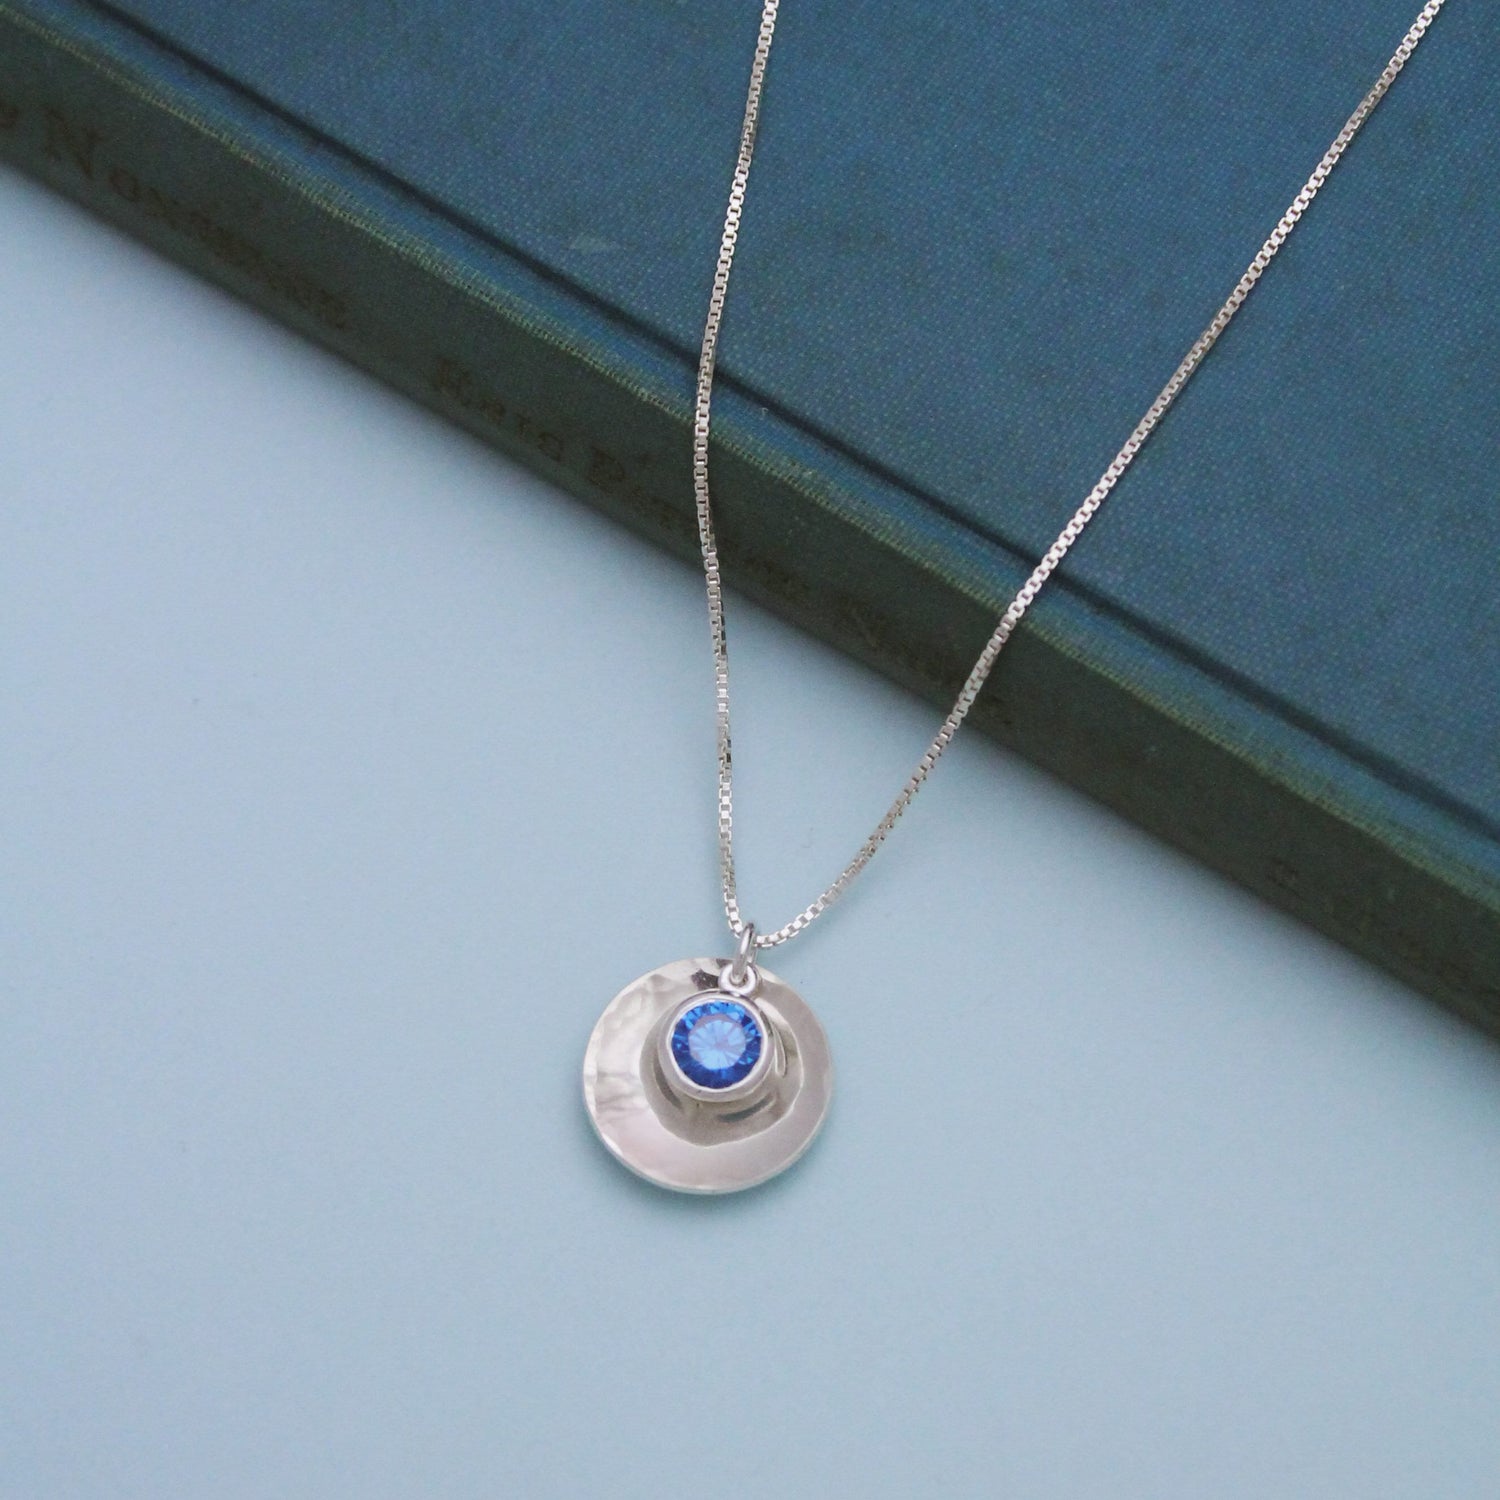 December Birthstone Necklace, Blue Topaz Jewelry, December Birthday Gift, December Birthstone Jewelry, December Necklace, Sterling Silver